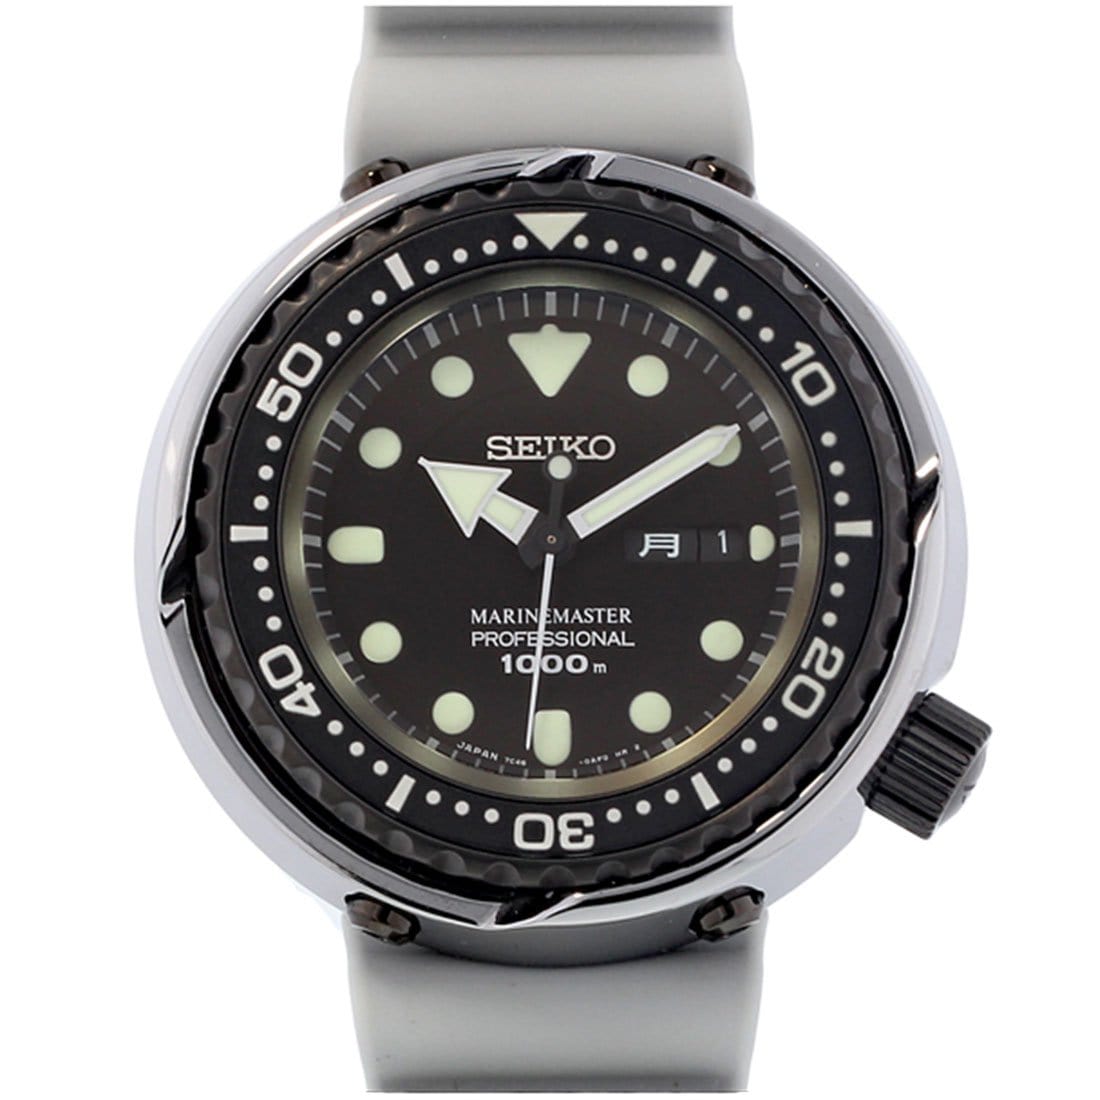 Seiko PROSPEX Marine Master Professional Tuna JDM Watch SBBN029